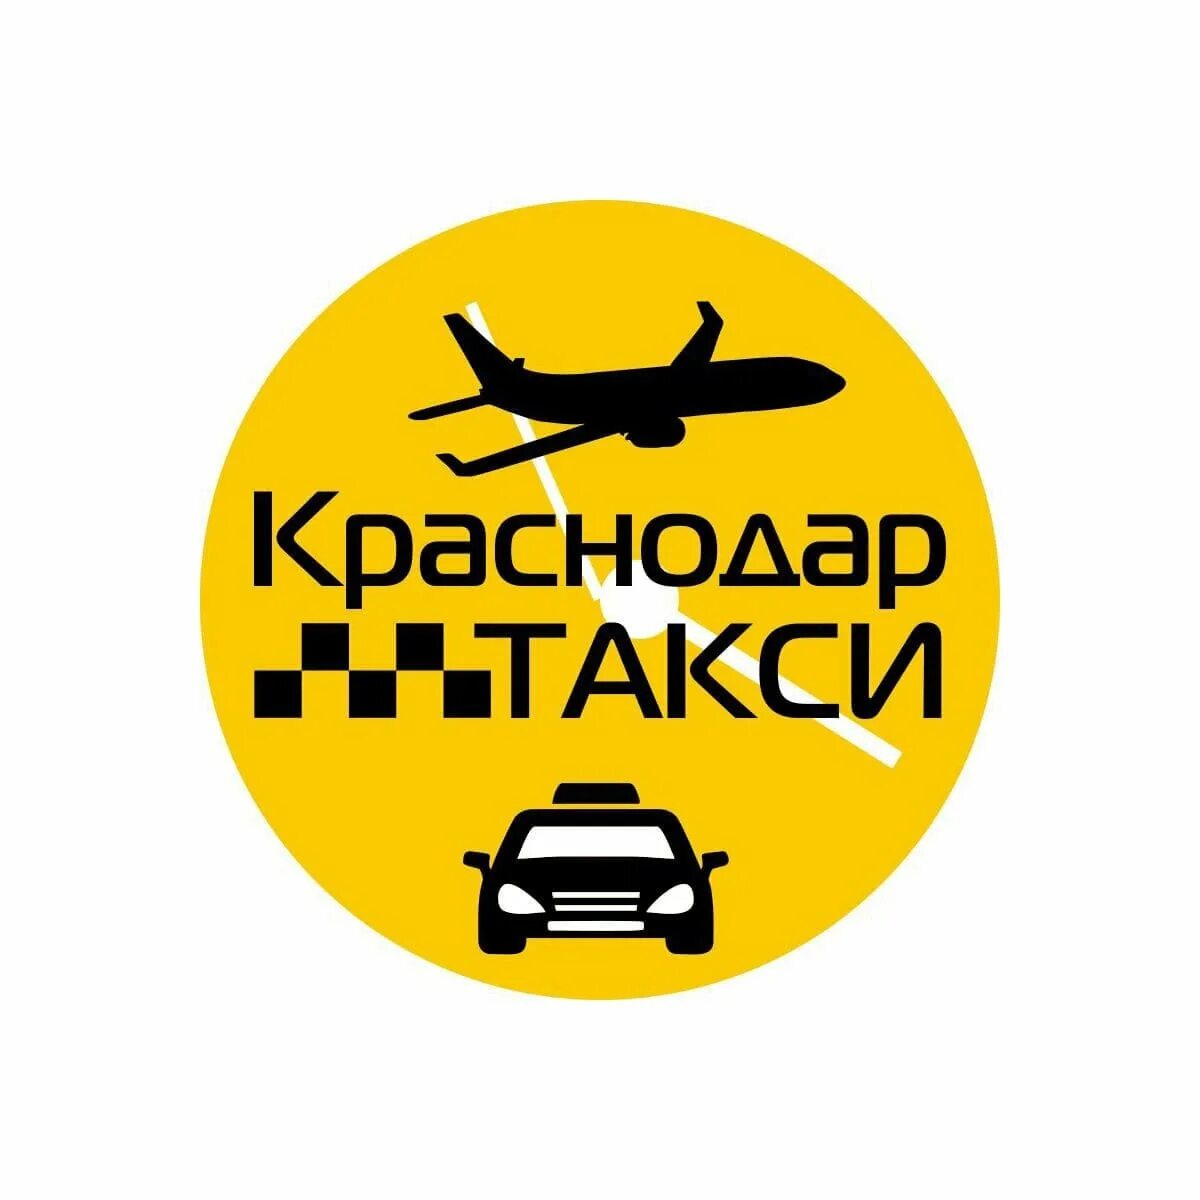 Краснодарская такси номер телефона. Такси Краснодар. Трансфер Краснодар такси. Номер такси в Краснодаре. Номер таксиста в Краснодаре.